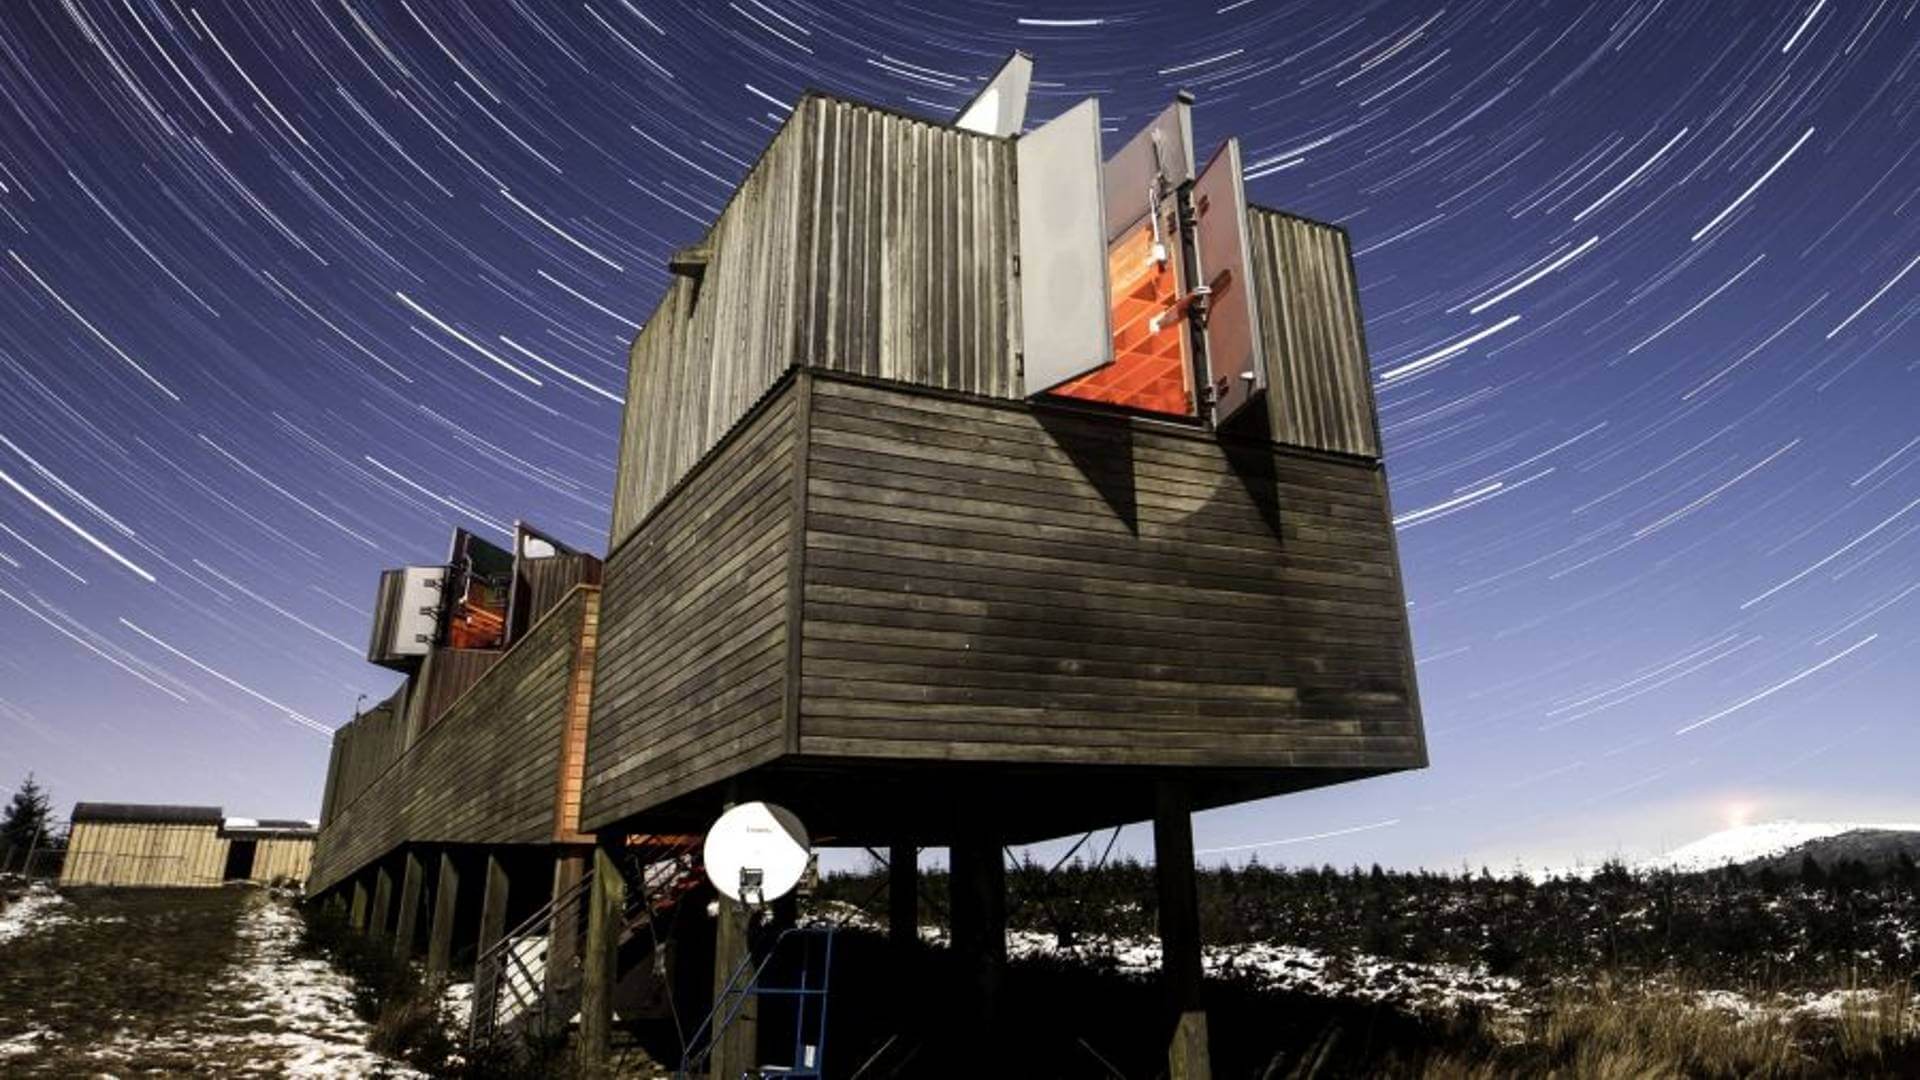 Kielder Observatory host to stargazing events